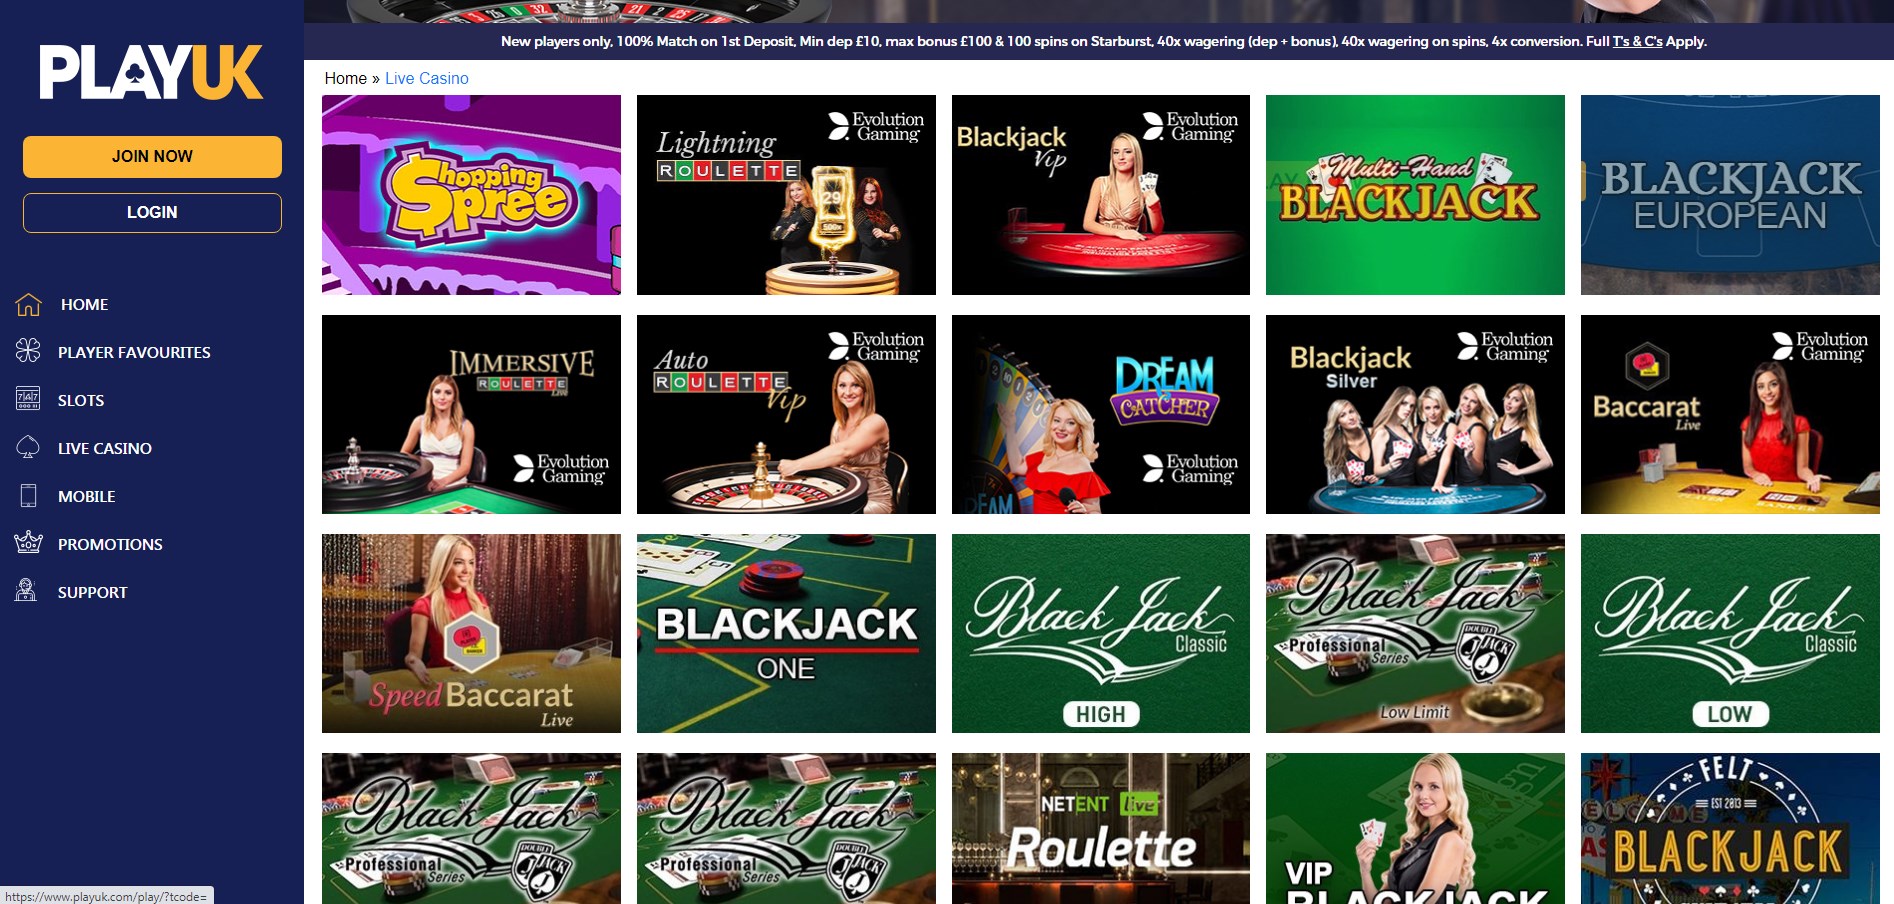 Play UK Casino Live Dealer Games